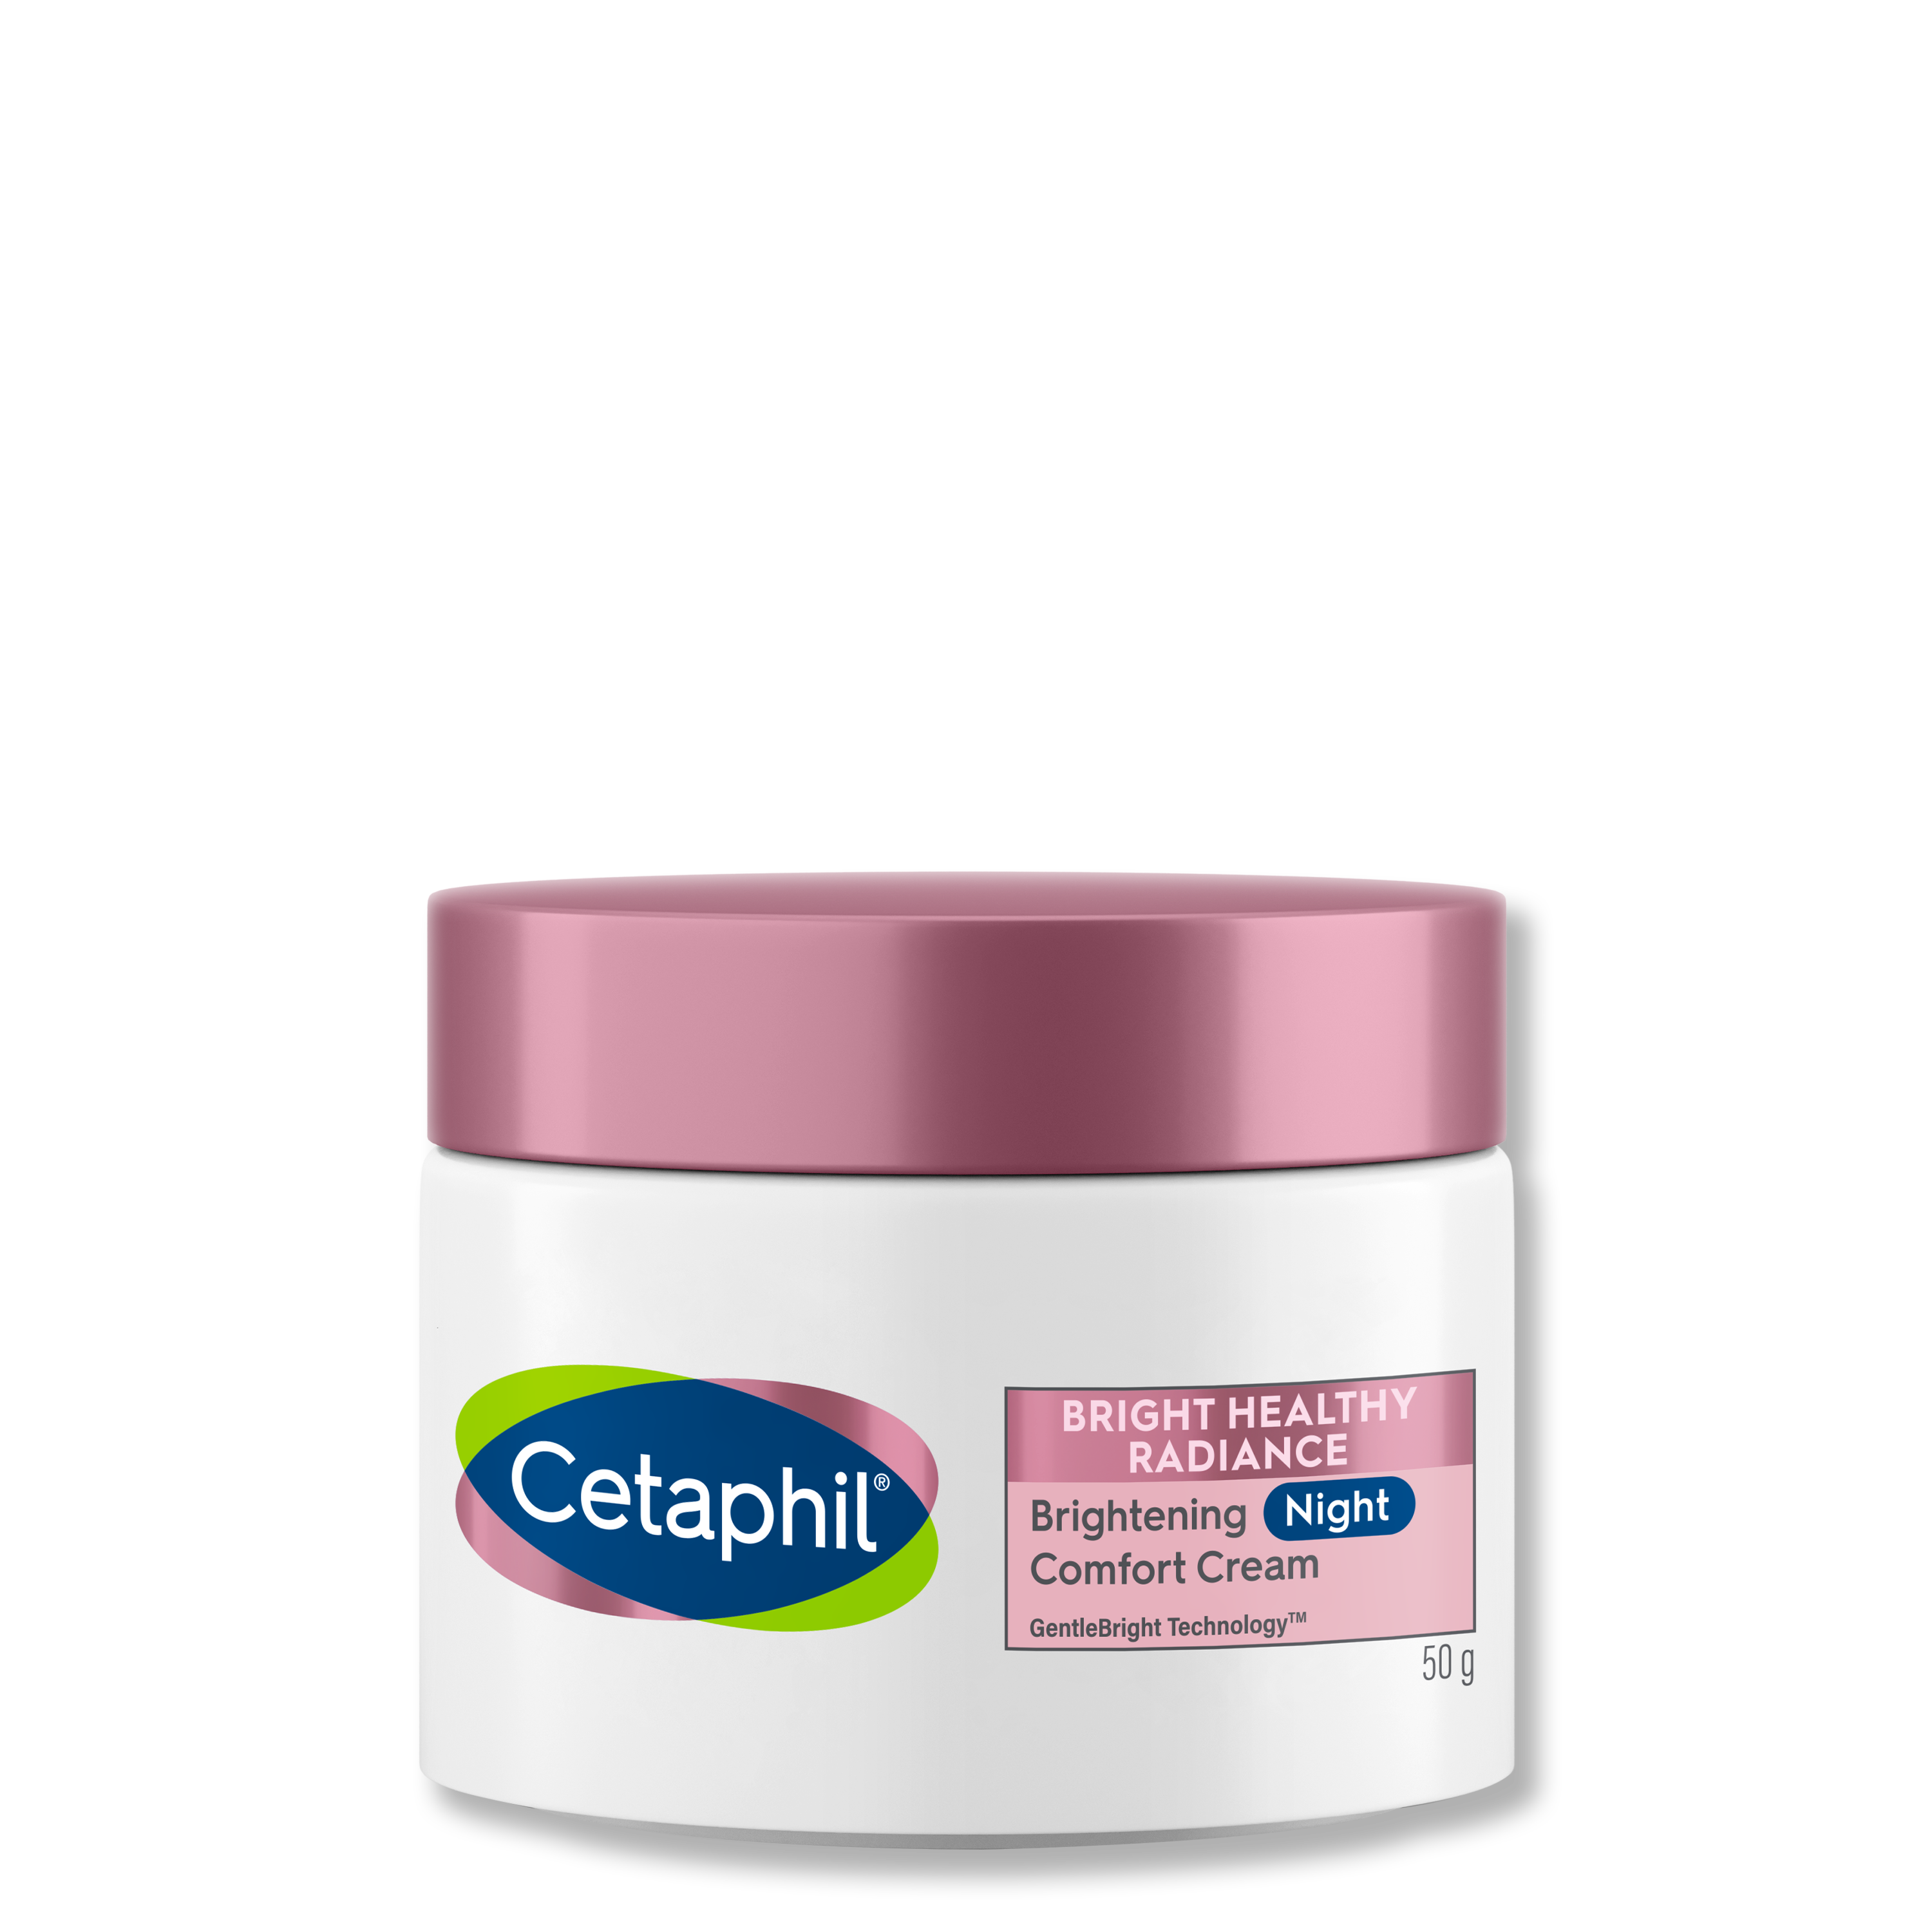 Cetaphil Bright Healthy Radiance Brightening Night Comfort Cream